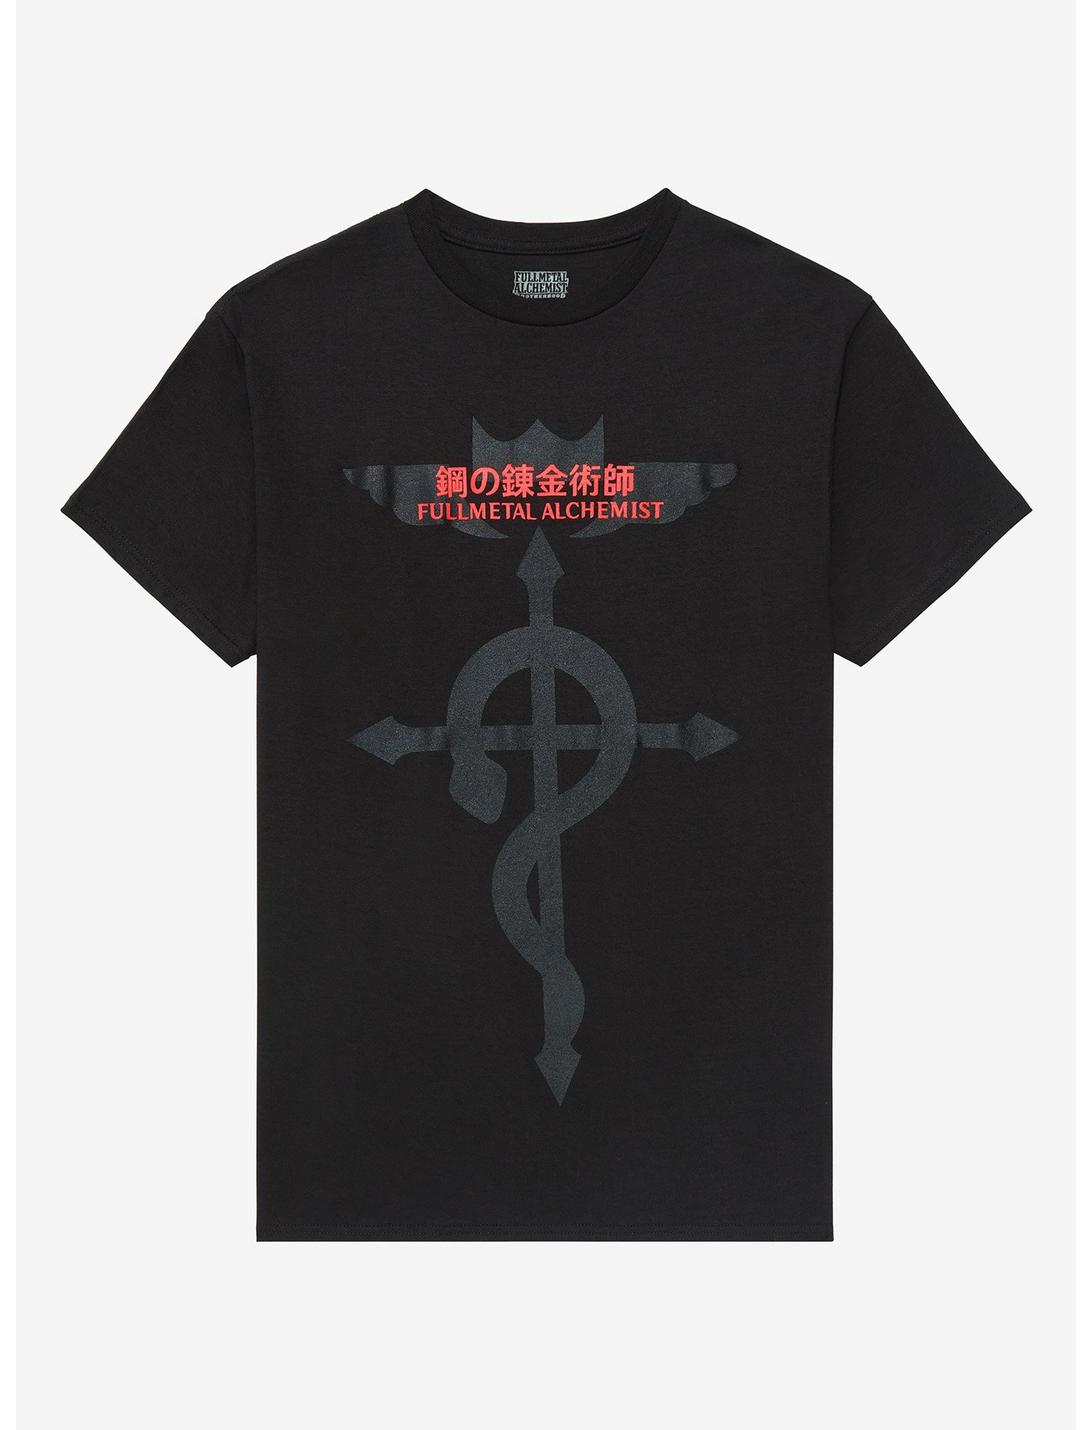 Fullmetal Alchemist: Brotherhood Flamel Cross T-Shirt, GREY, hi-res